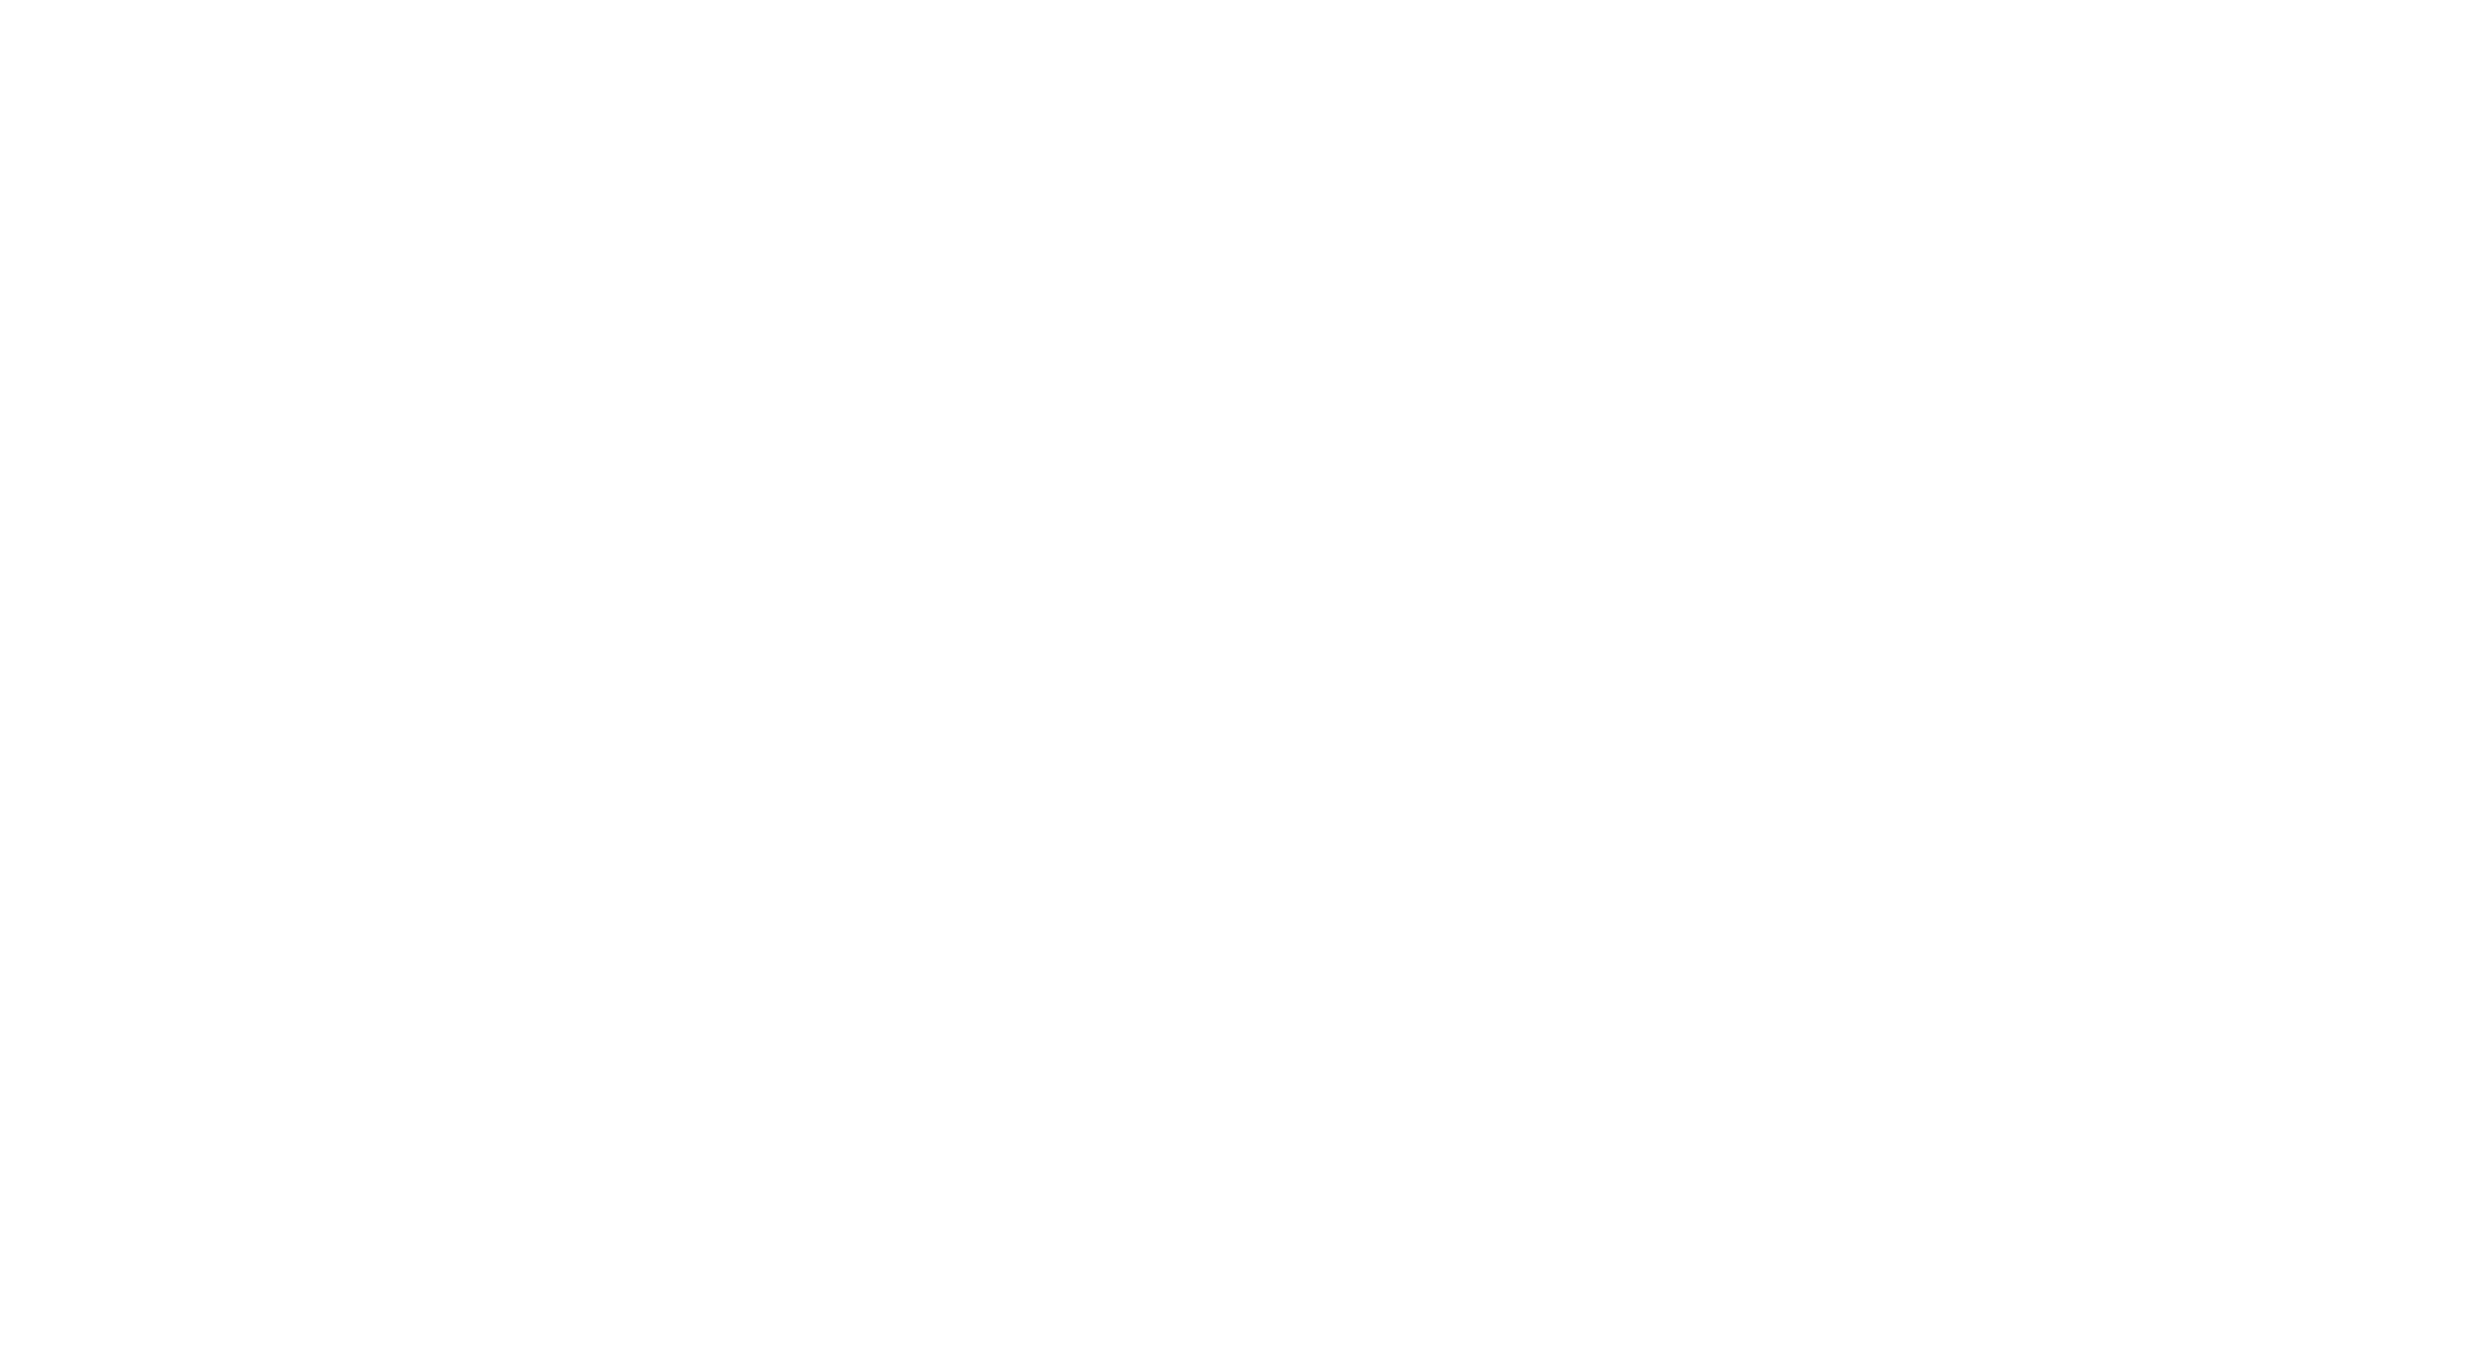 Logo ADHOC GREEN_Blanco con eslogan